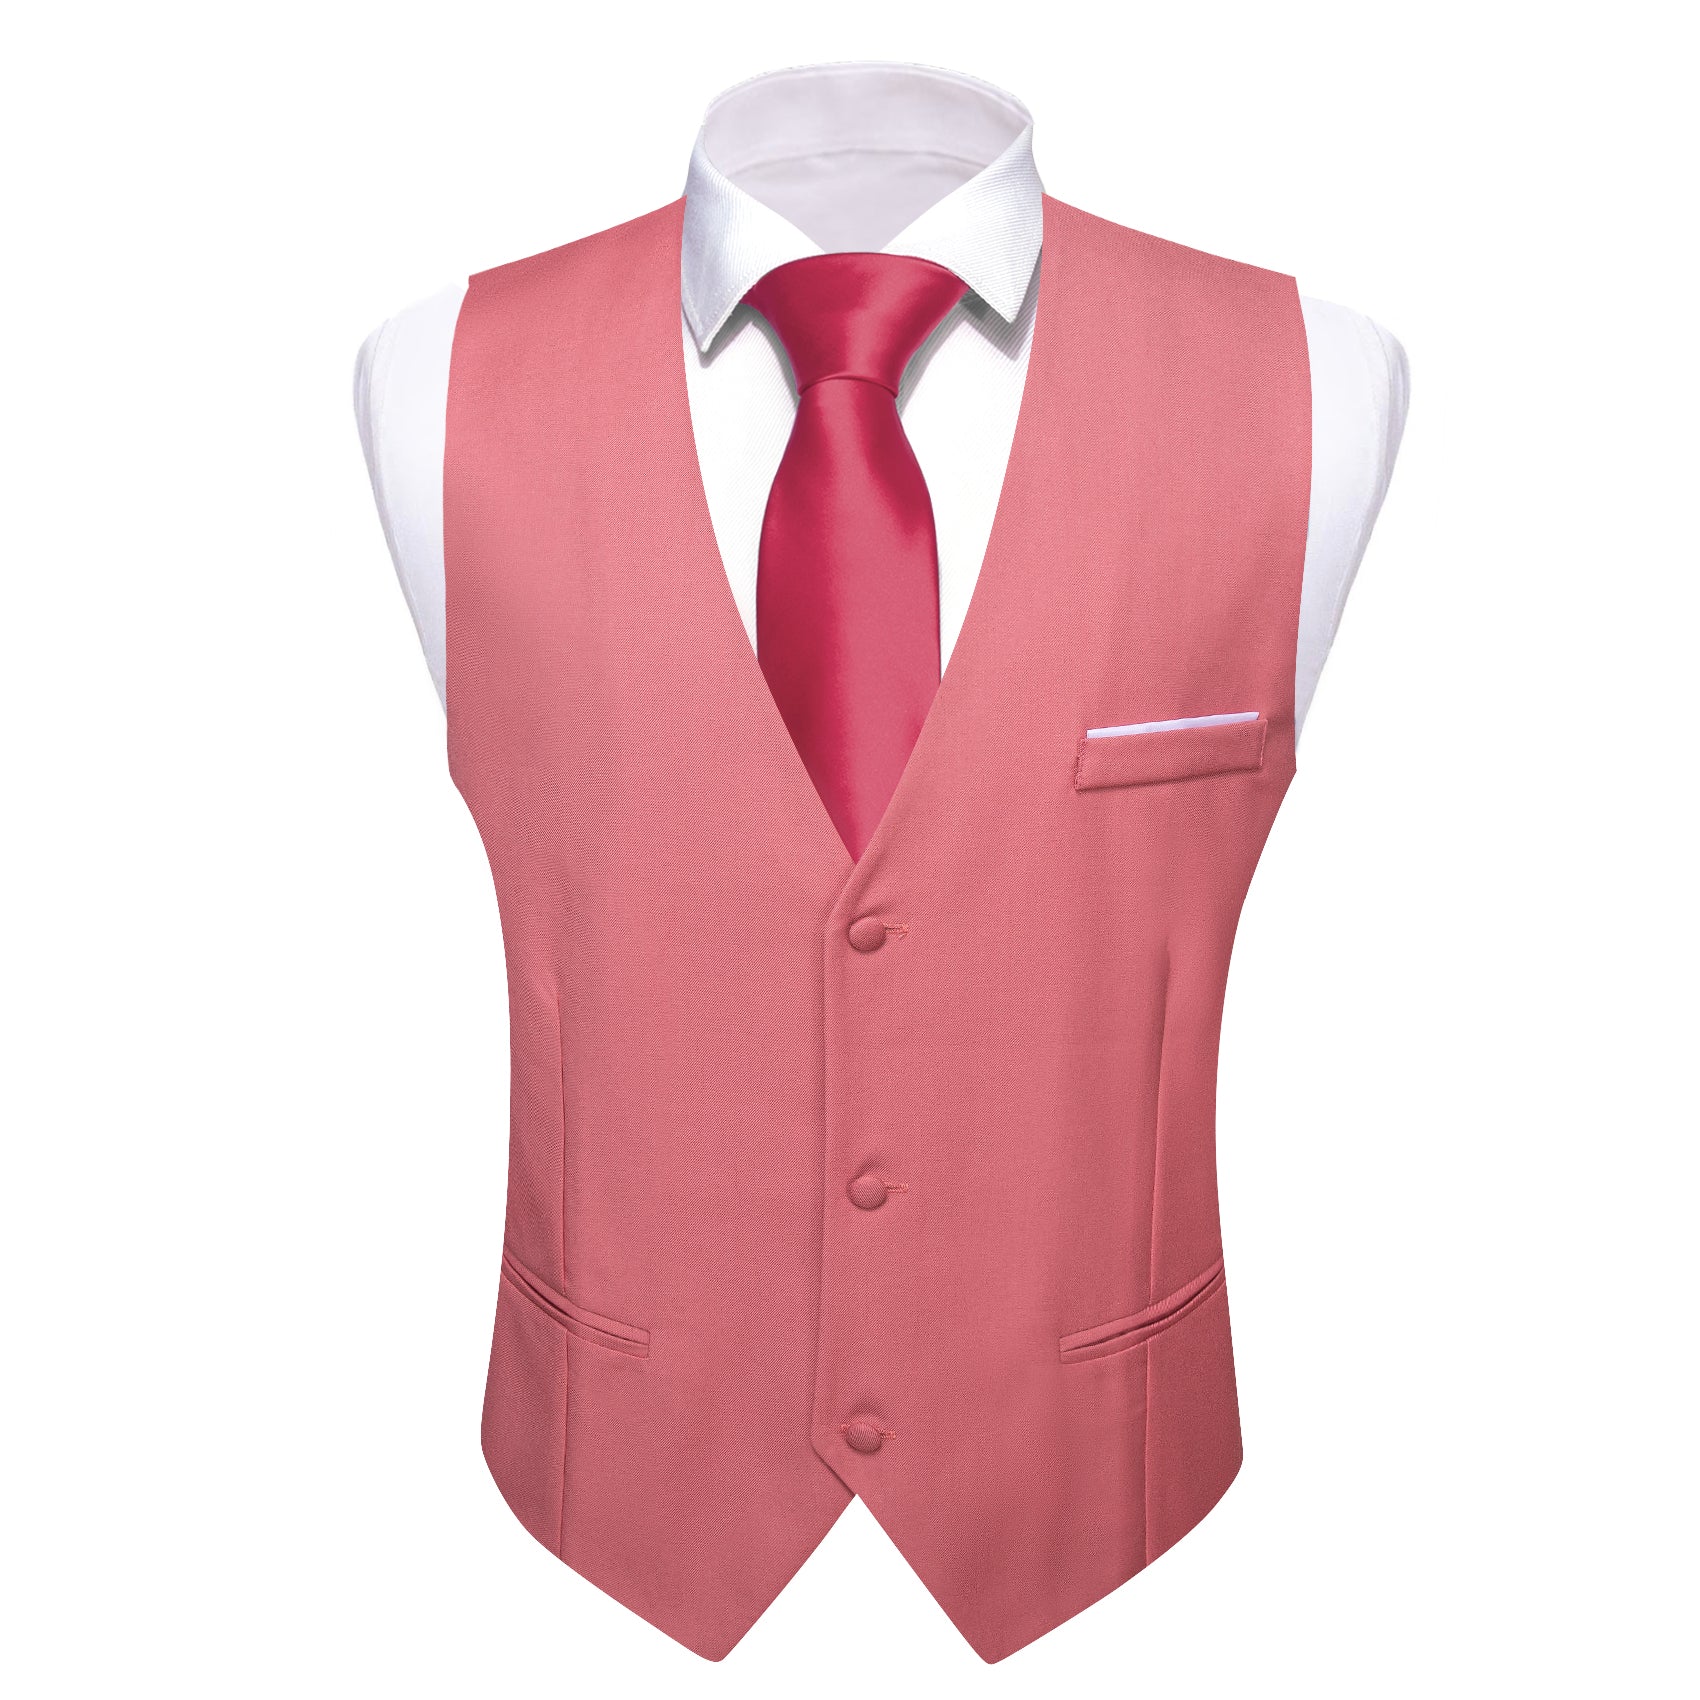 Barry.wang Light Coral Solid Business Vest Suit